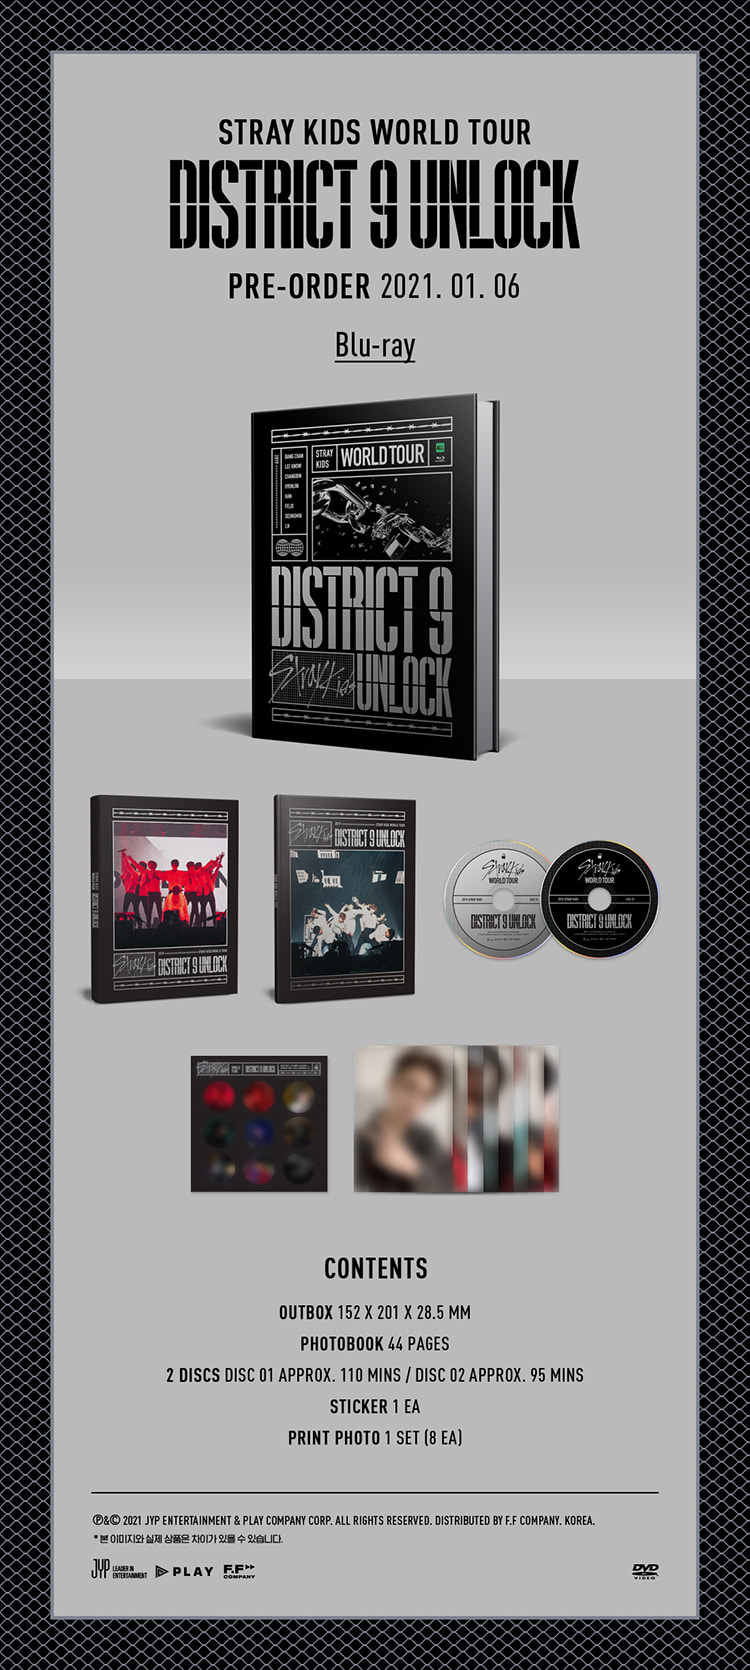 Stray Kids World Tour District 9 Blu-ray